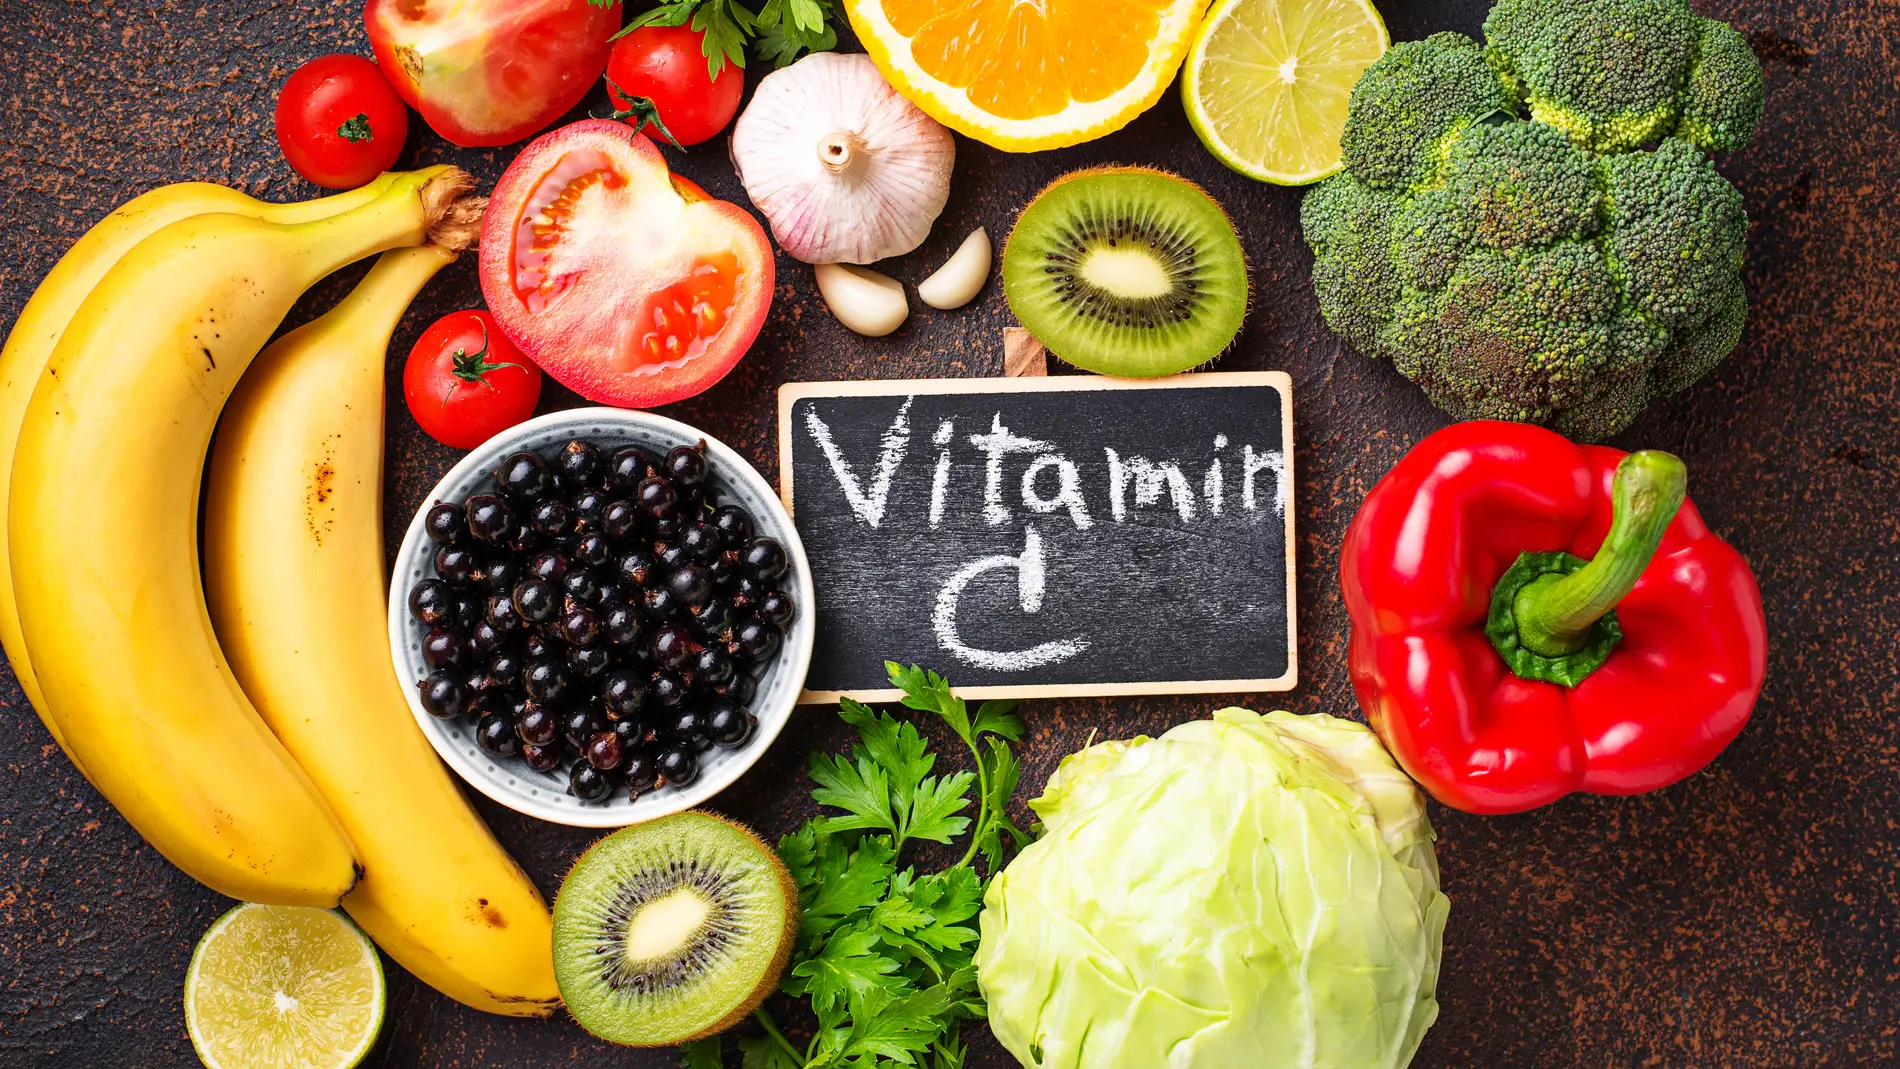 Cuatro mentiras i una verdad sobre la vitamina C